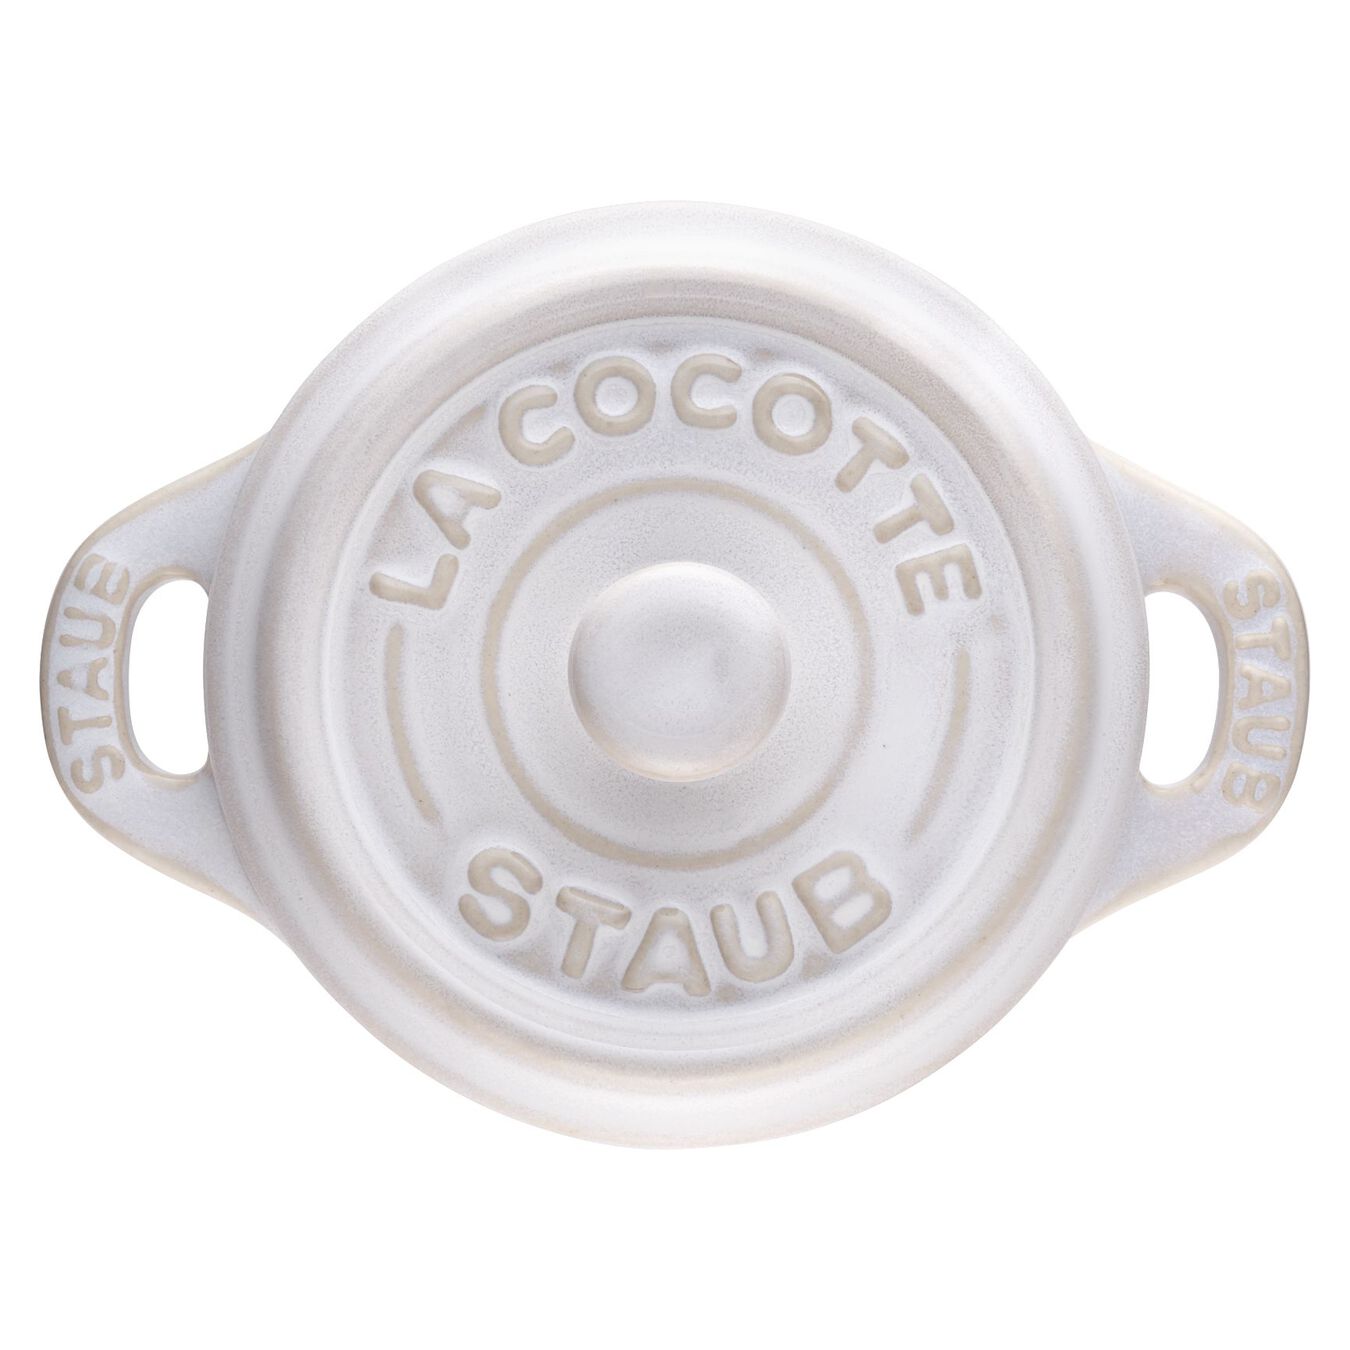 Mini cocotte 10 cm, redondo, Blanco marfil, Cerámica,,large 5